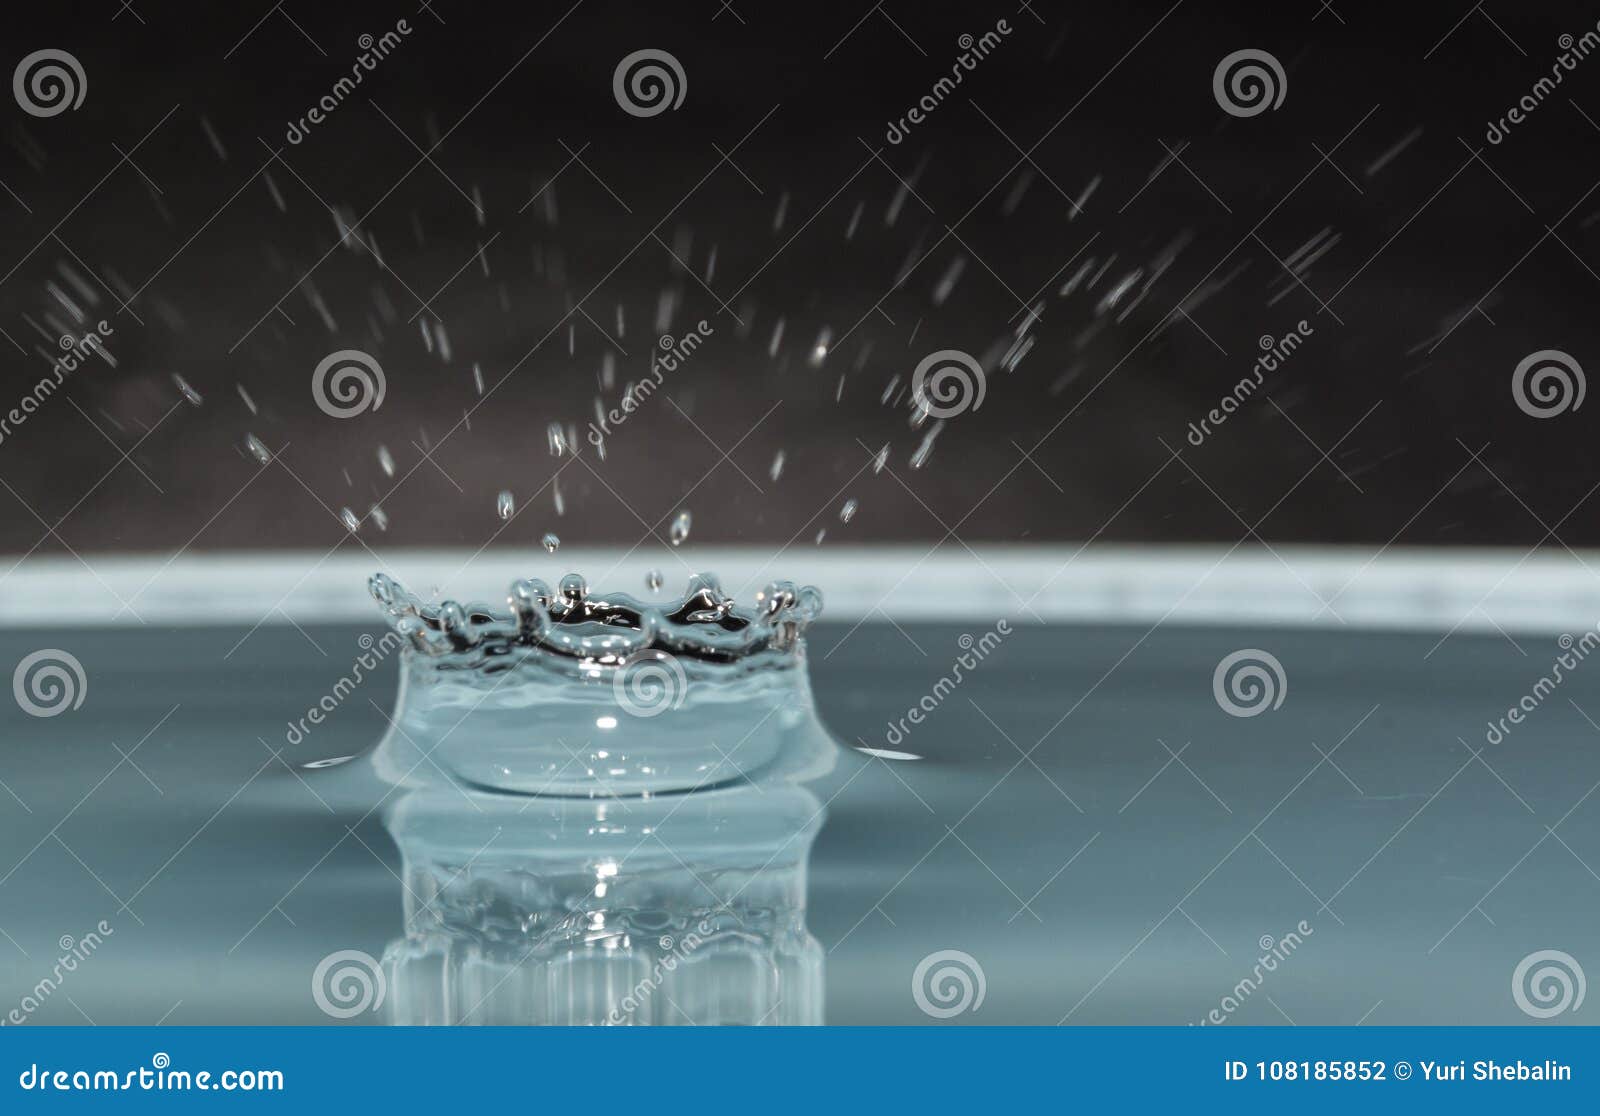 water drop impact